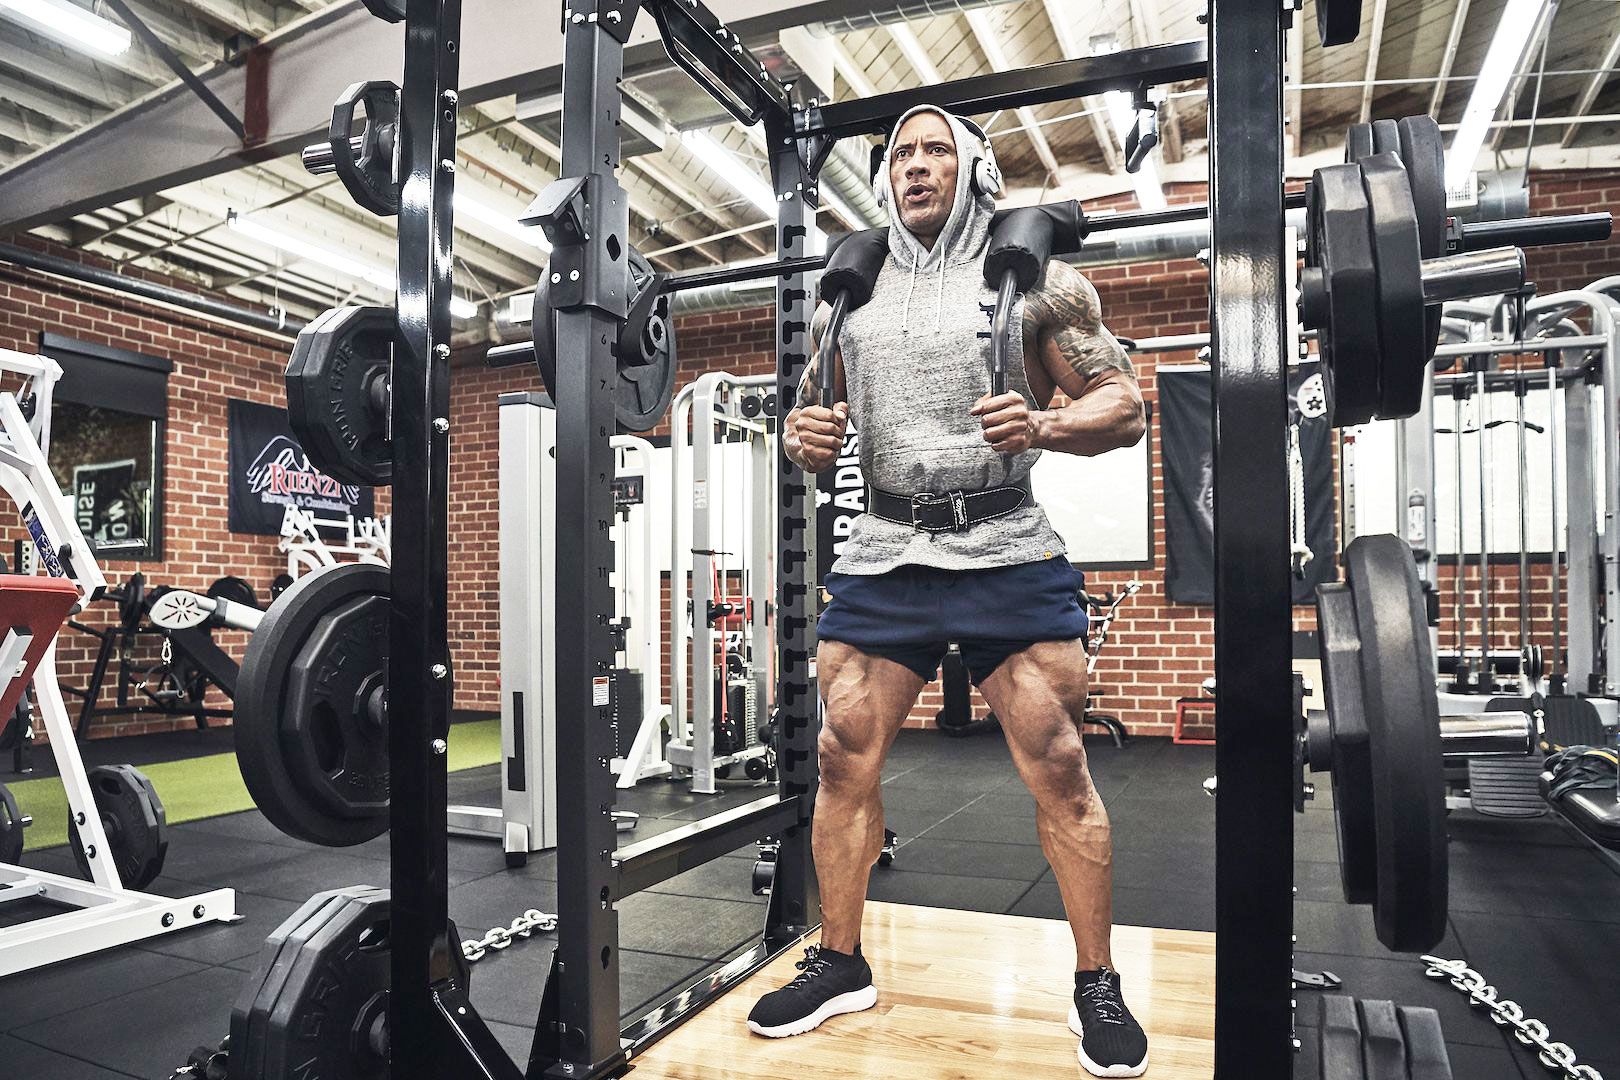 Dwayne Johnson a.k.a. The Rock's full body workout